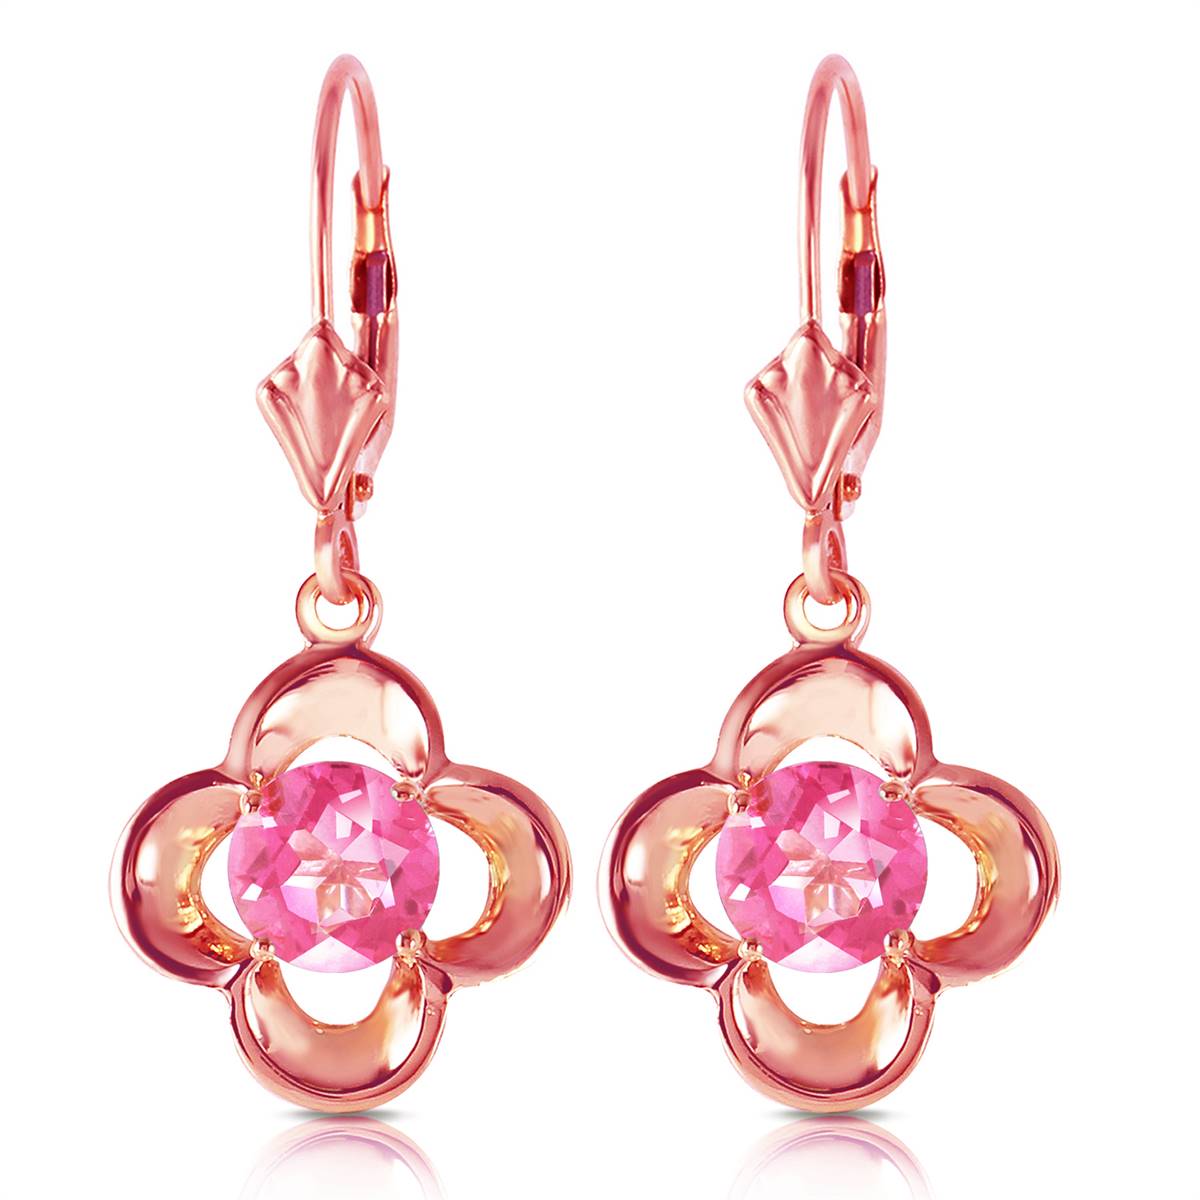 1.1 Carat 14K Solid Rose Gold Leverback Earrings Natural Pink Topaz